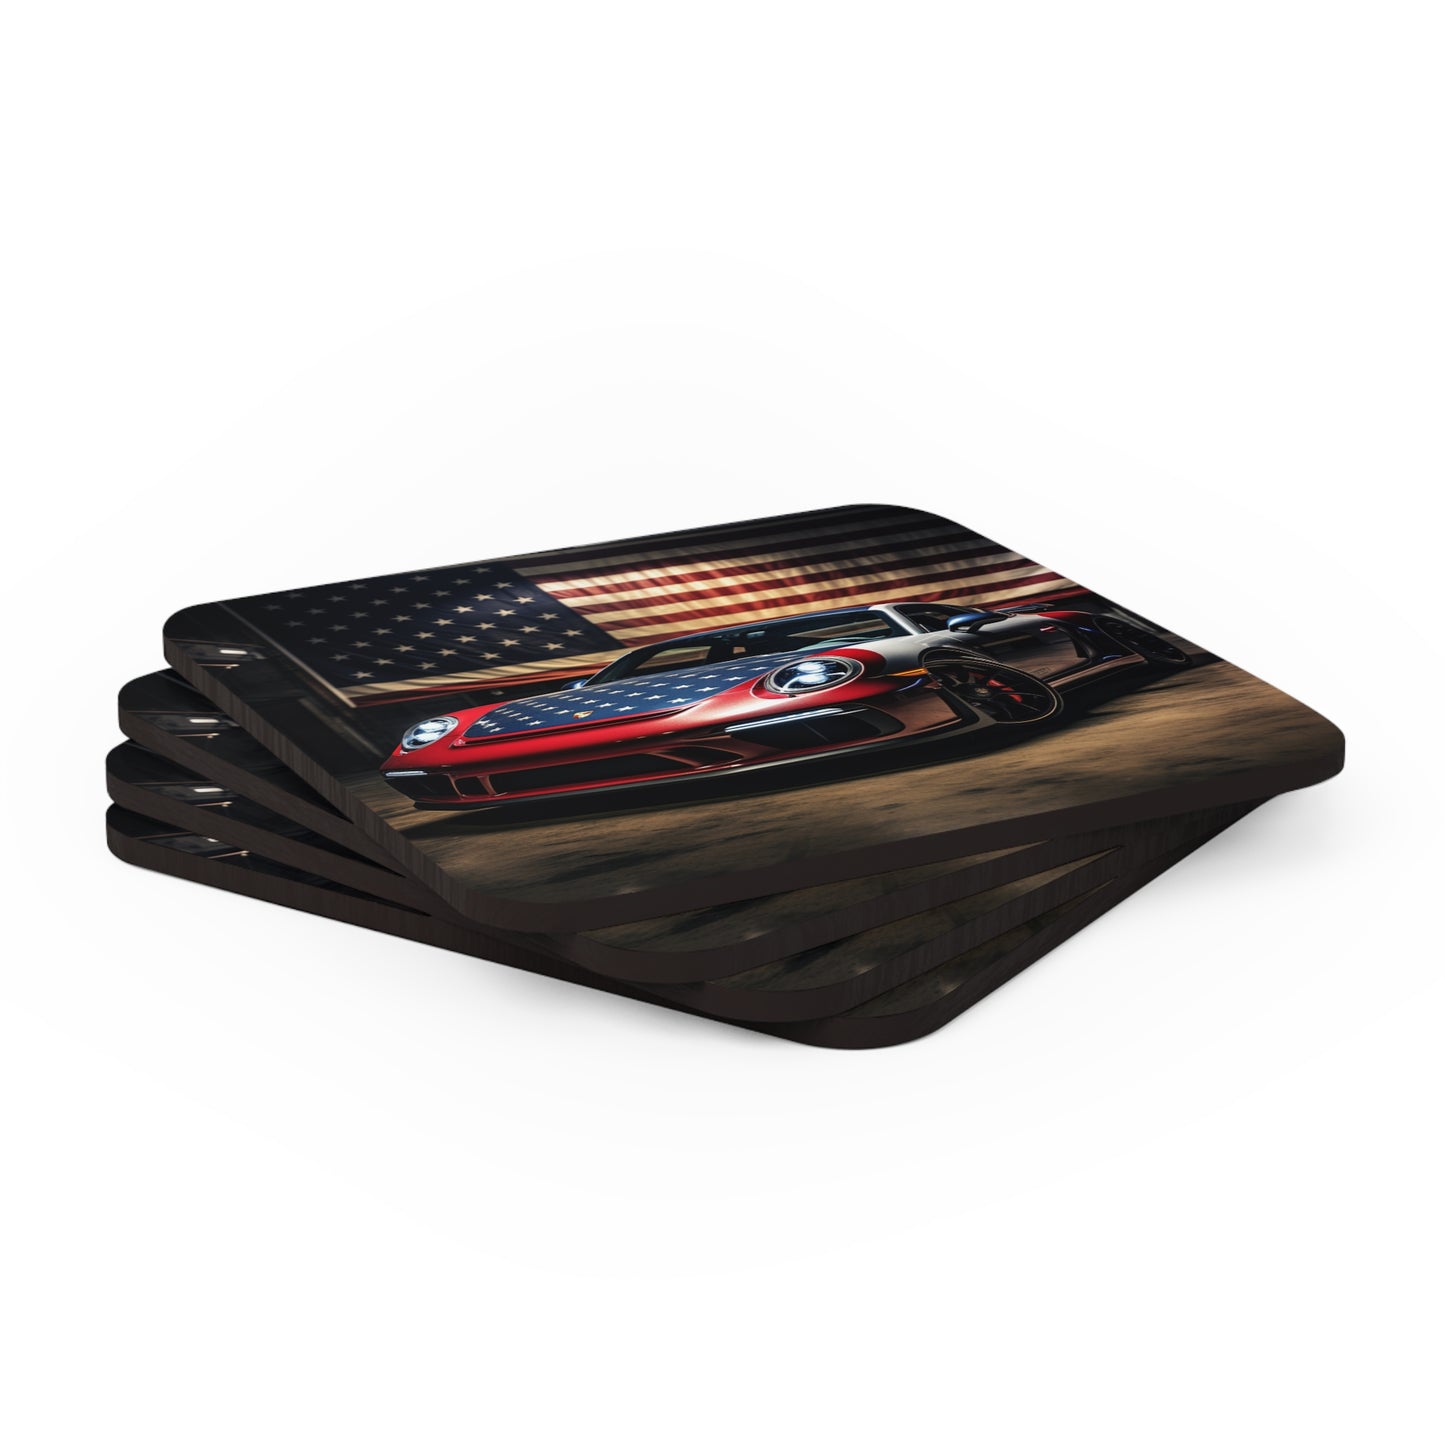 Corkwood Coaster Set American Flag Background Porsche 1